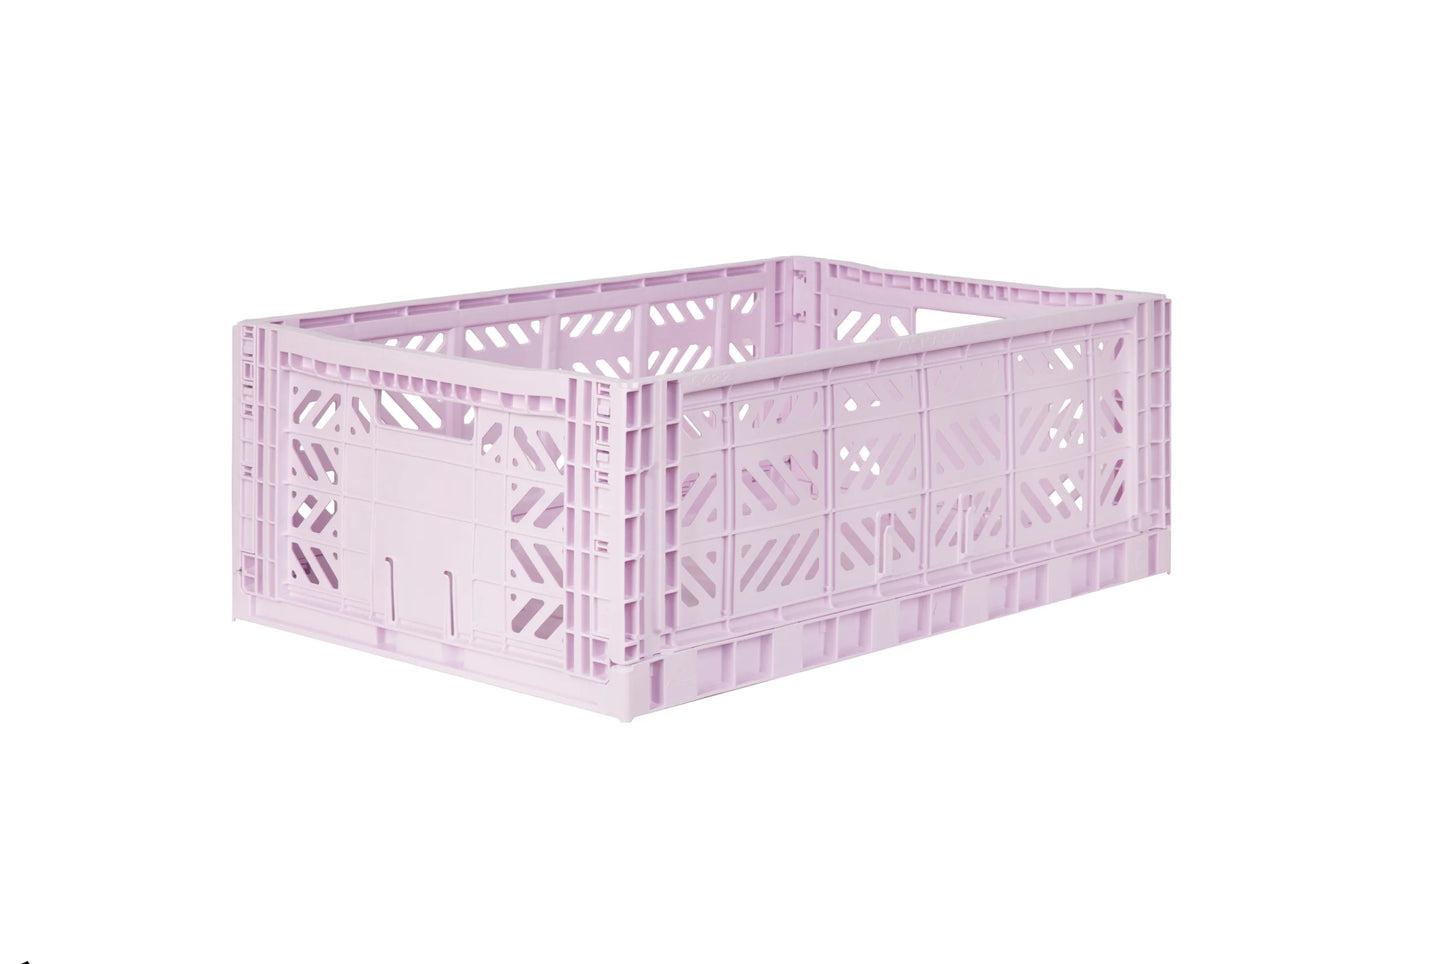 Foldable MAXI Crate